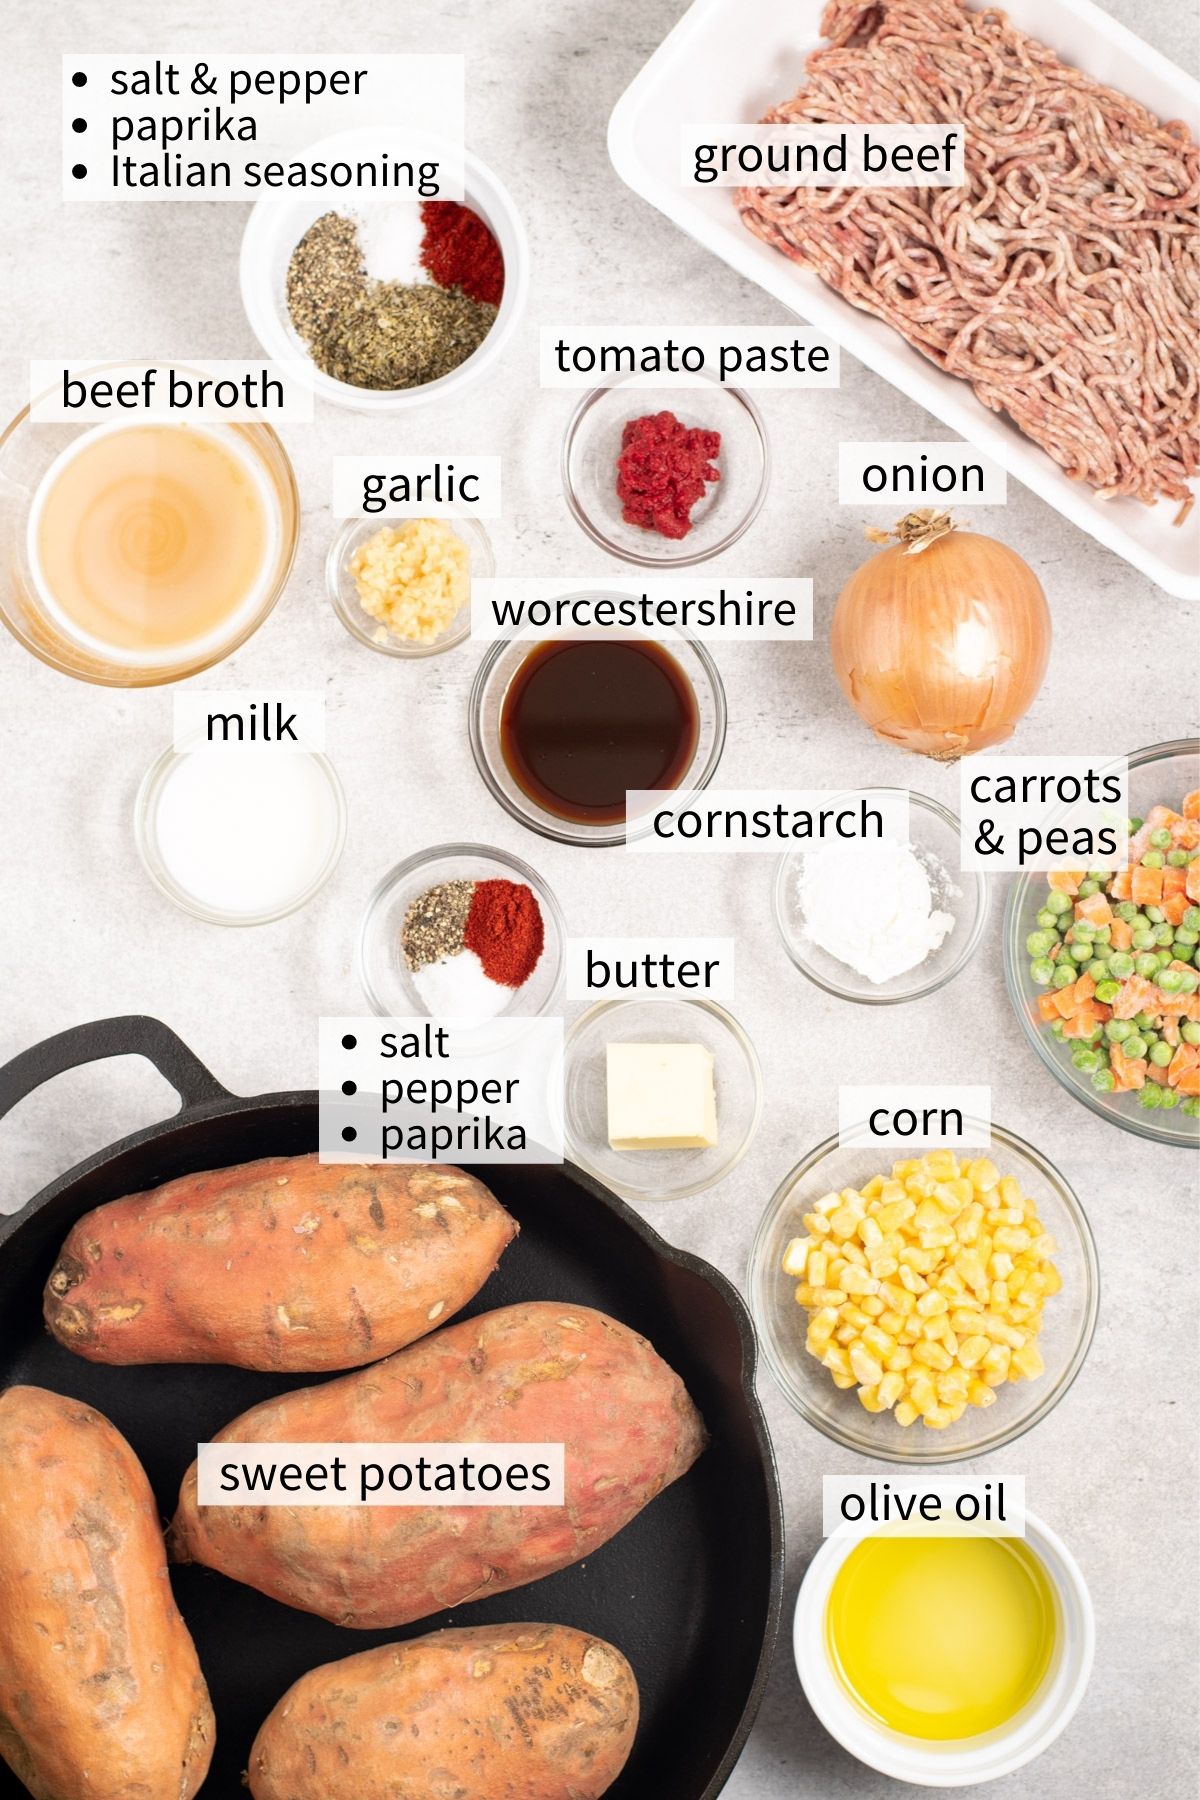 ingredients to make sweet potato shepherds pie skillet.